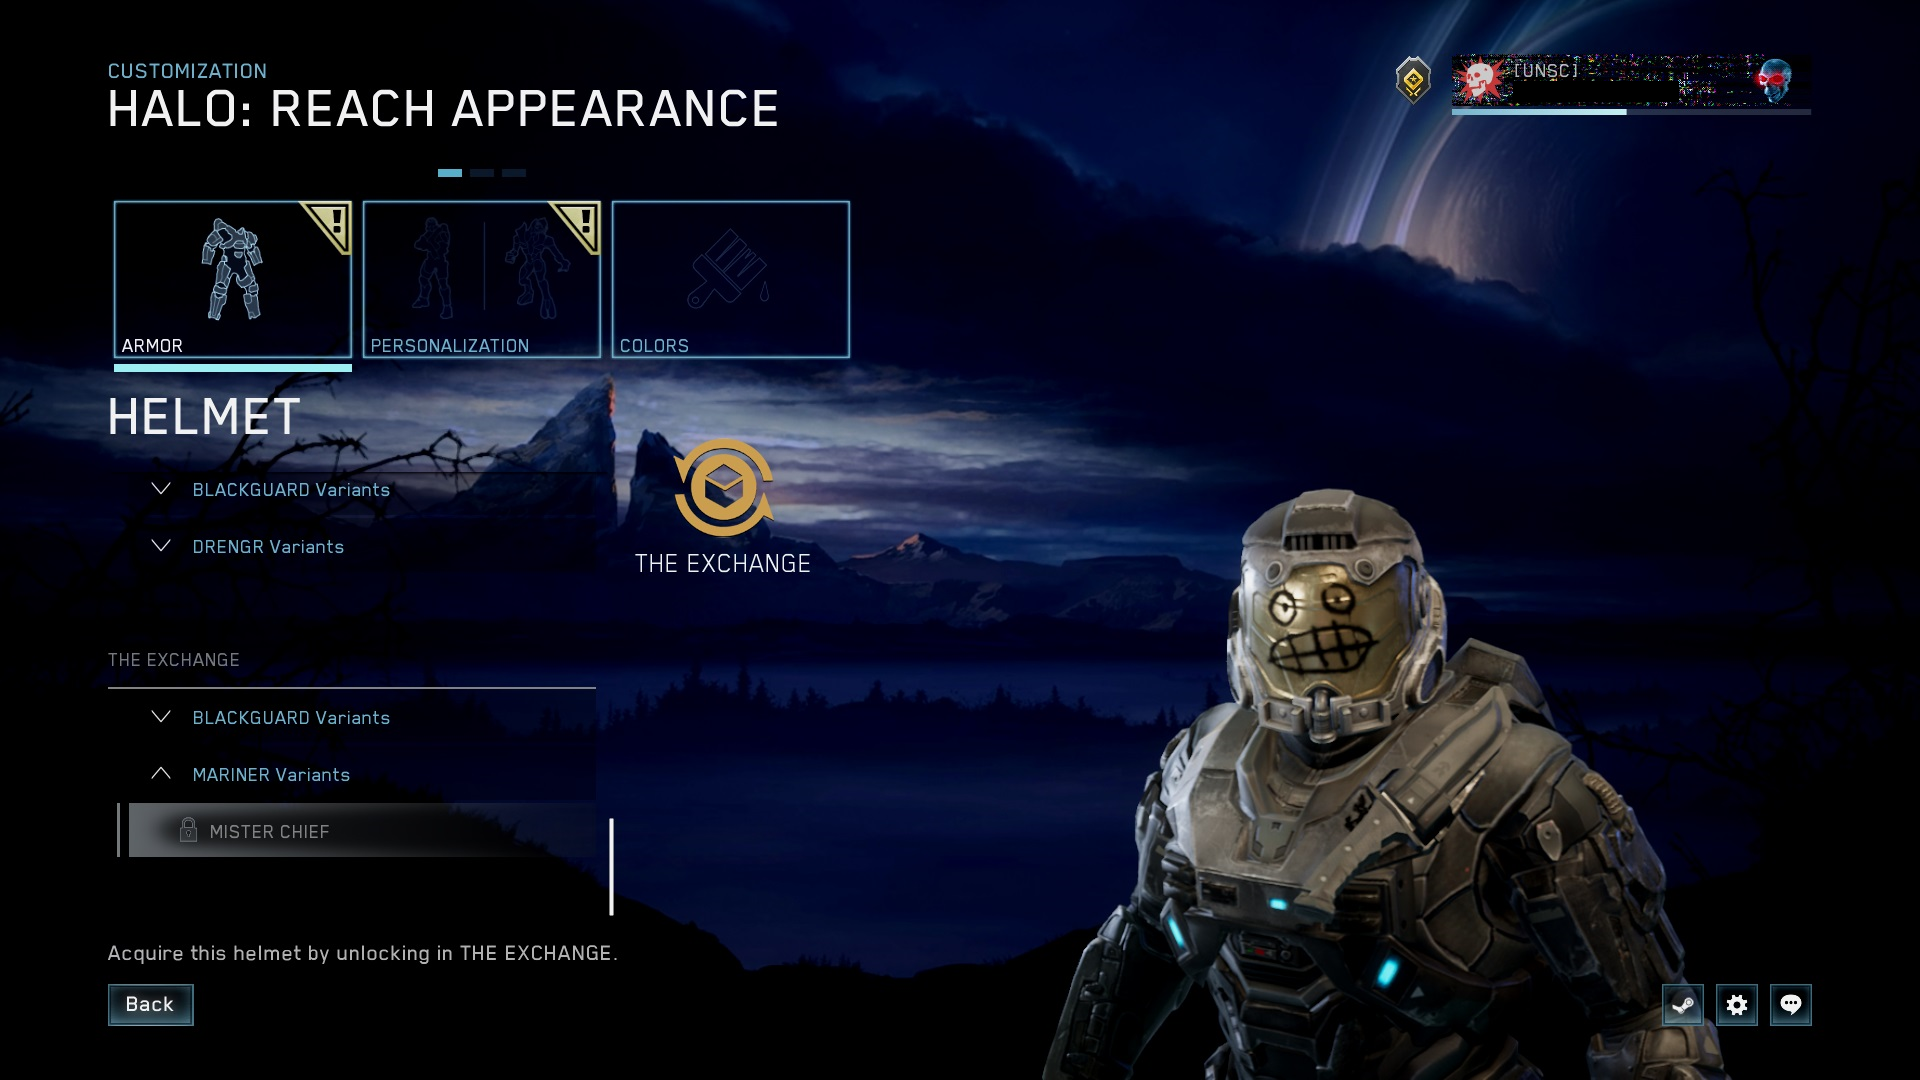 Screenshot of customization menu showcasing improvements